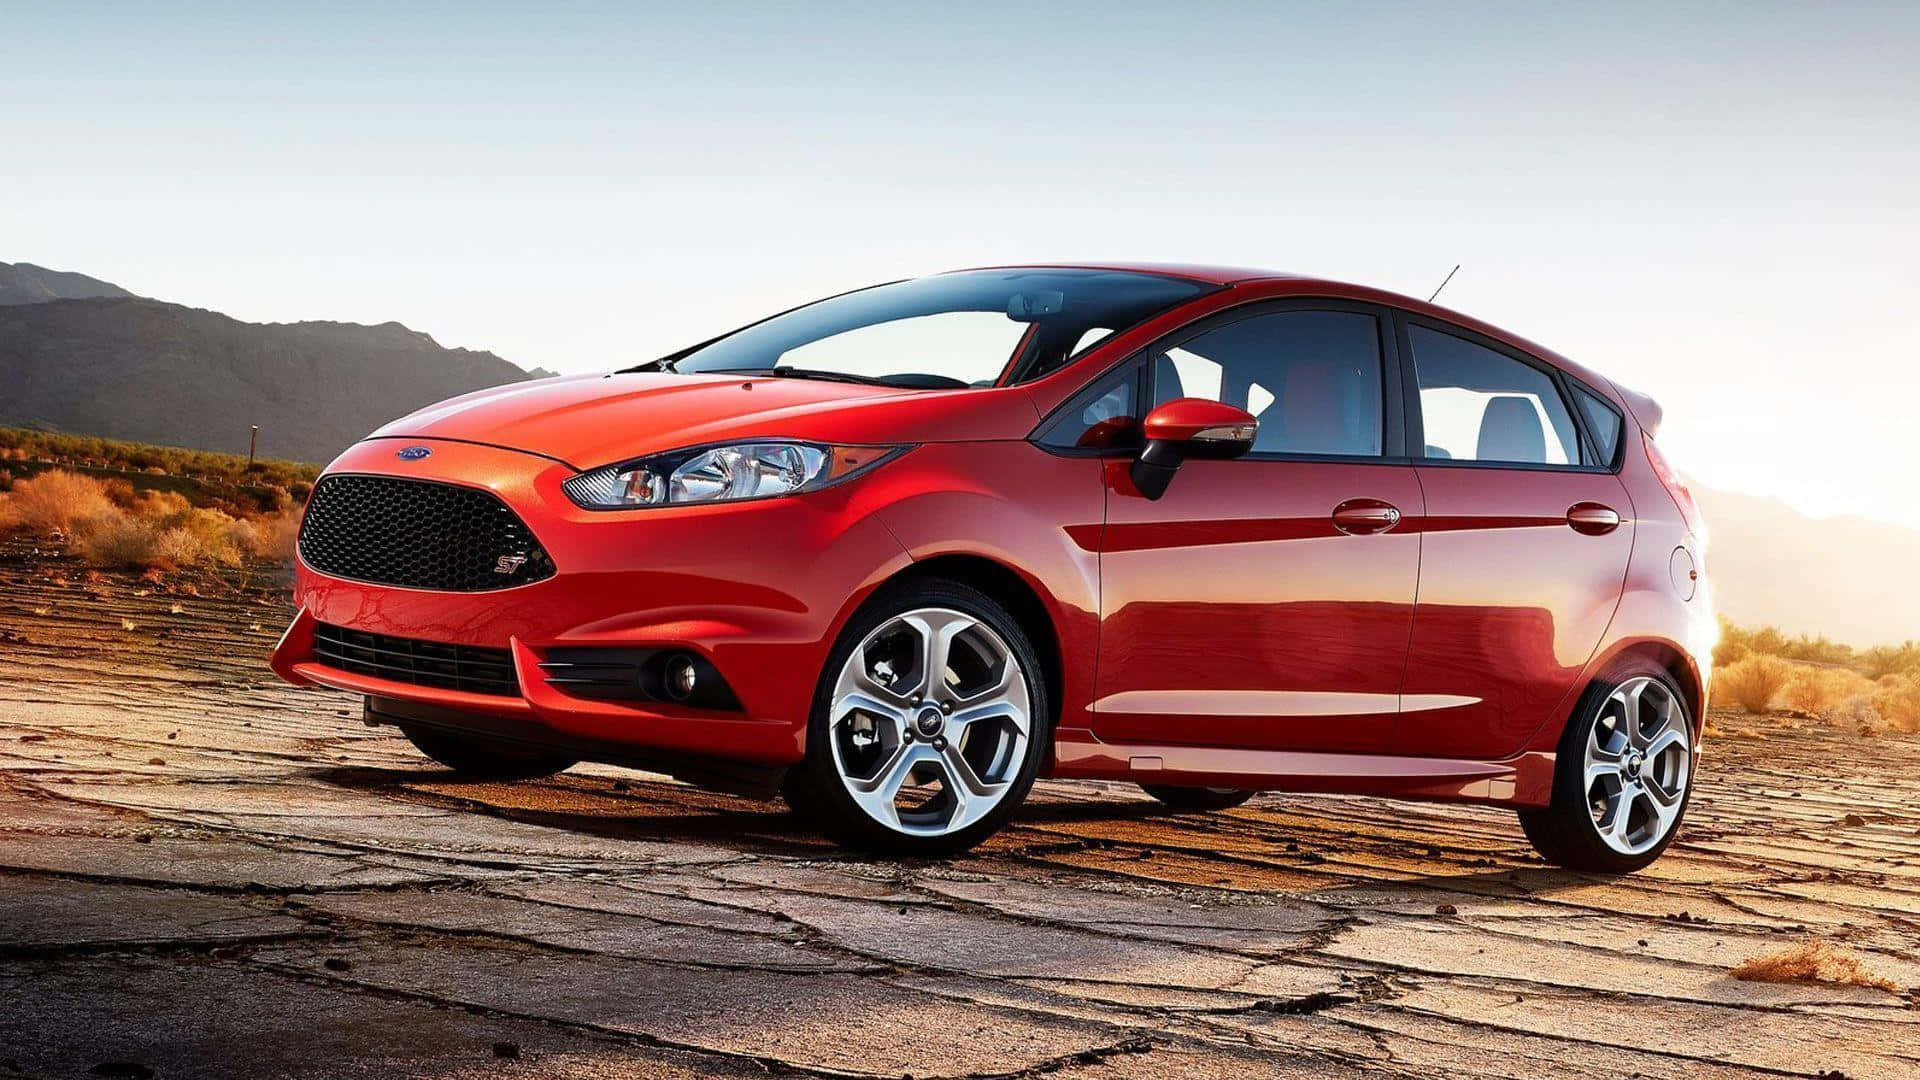 Sleek Ford Fiesta in Action Wallpaper